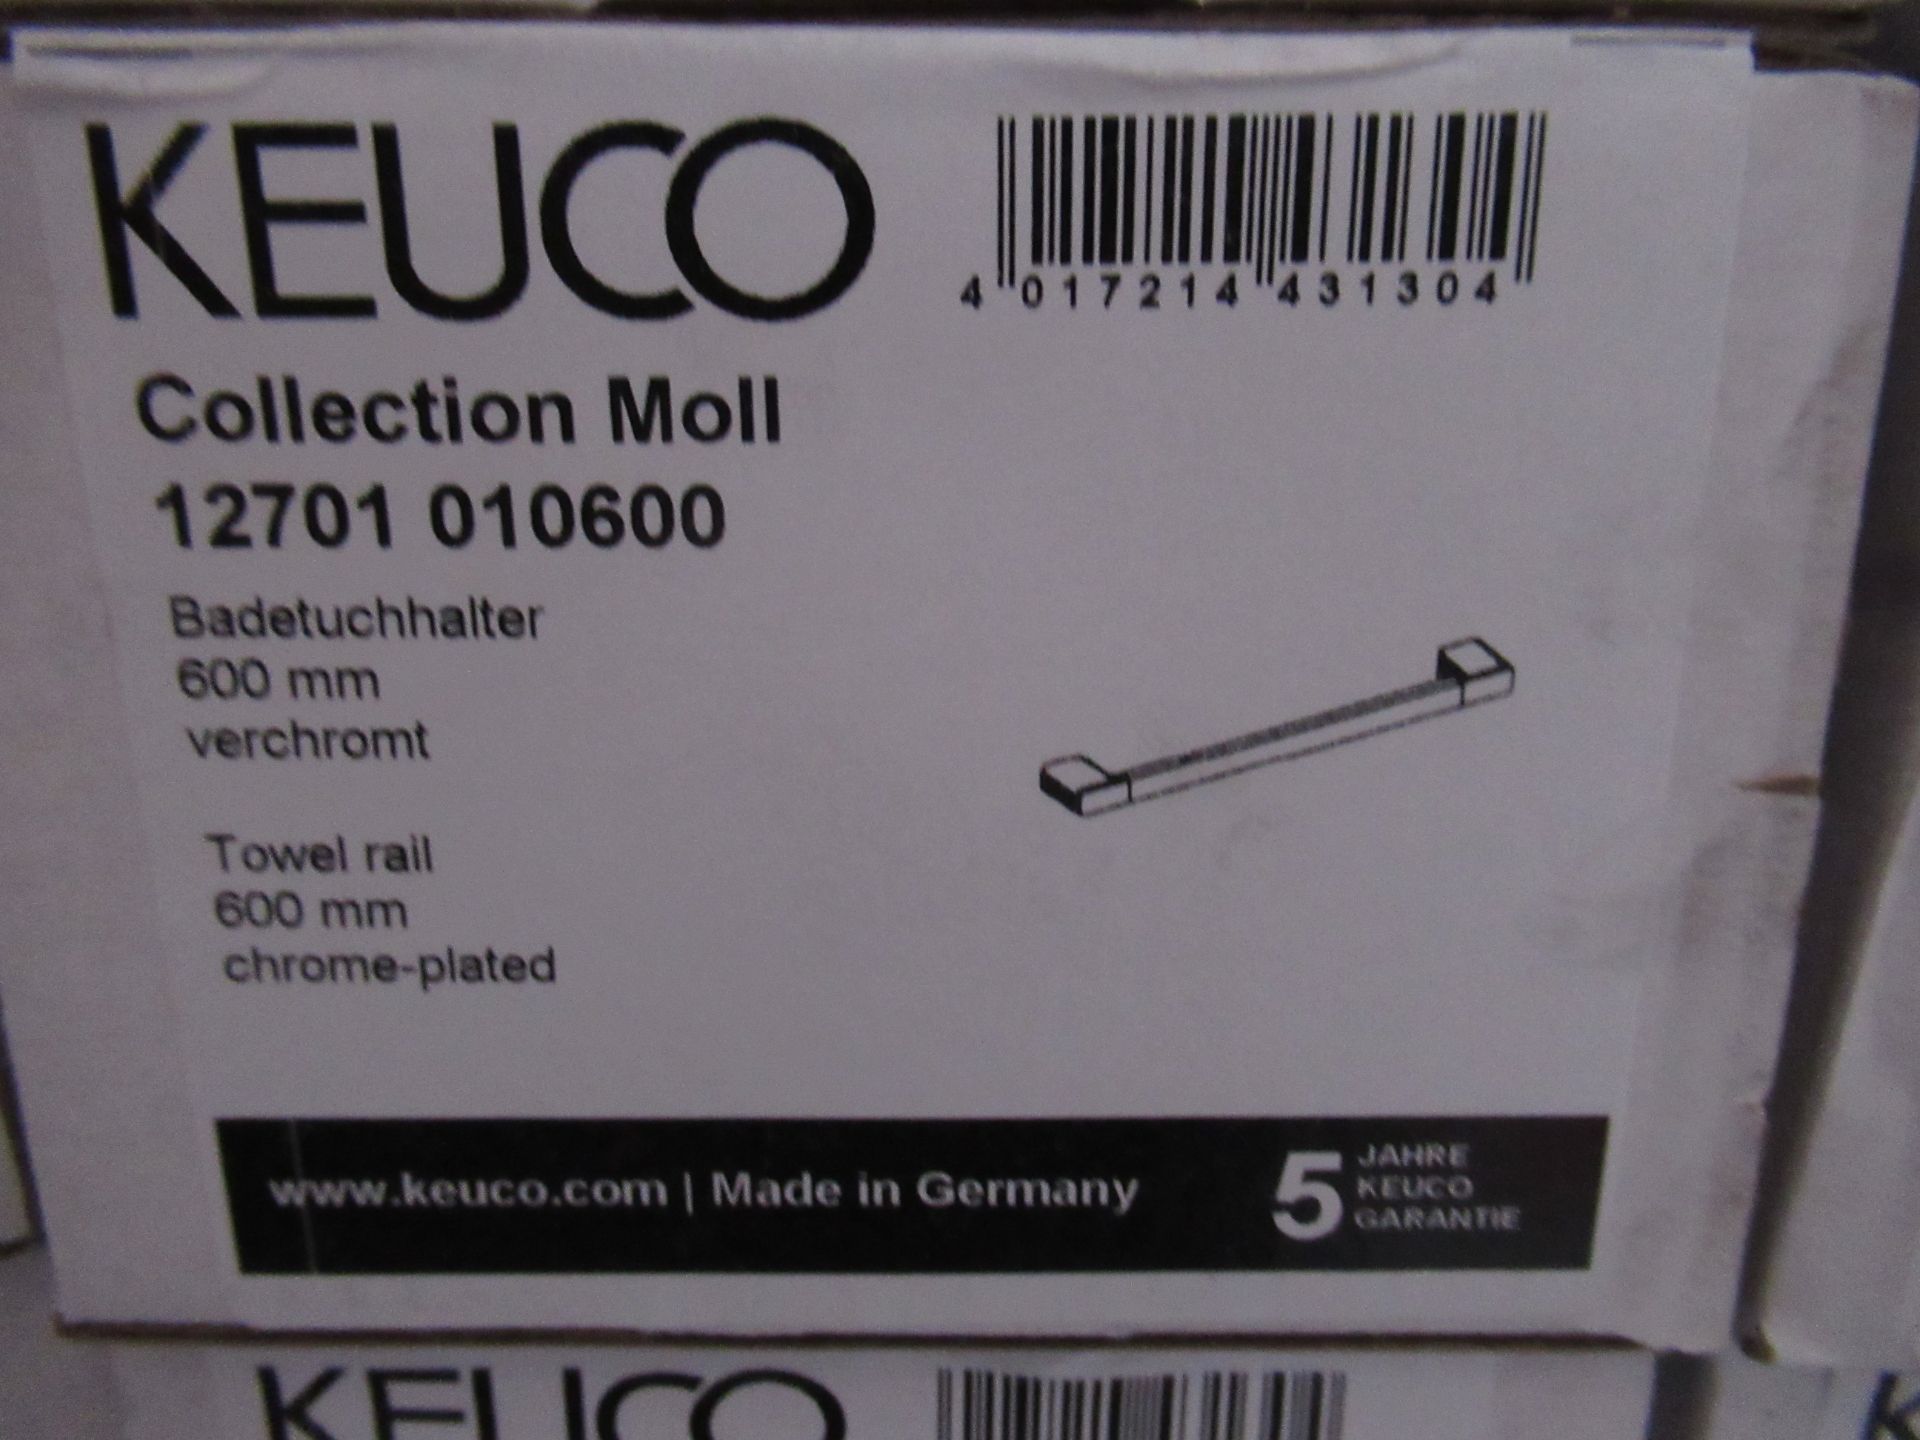 4 x Keuco Collection Moll Towel Rail Chrome Plated, P/N 12701-010600 - Image 2 of 2